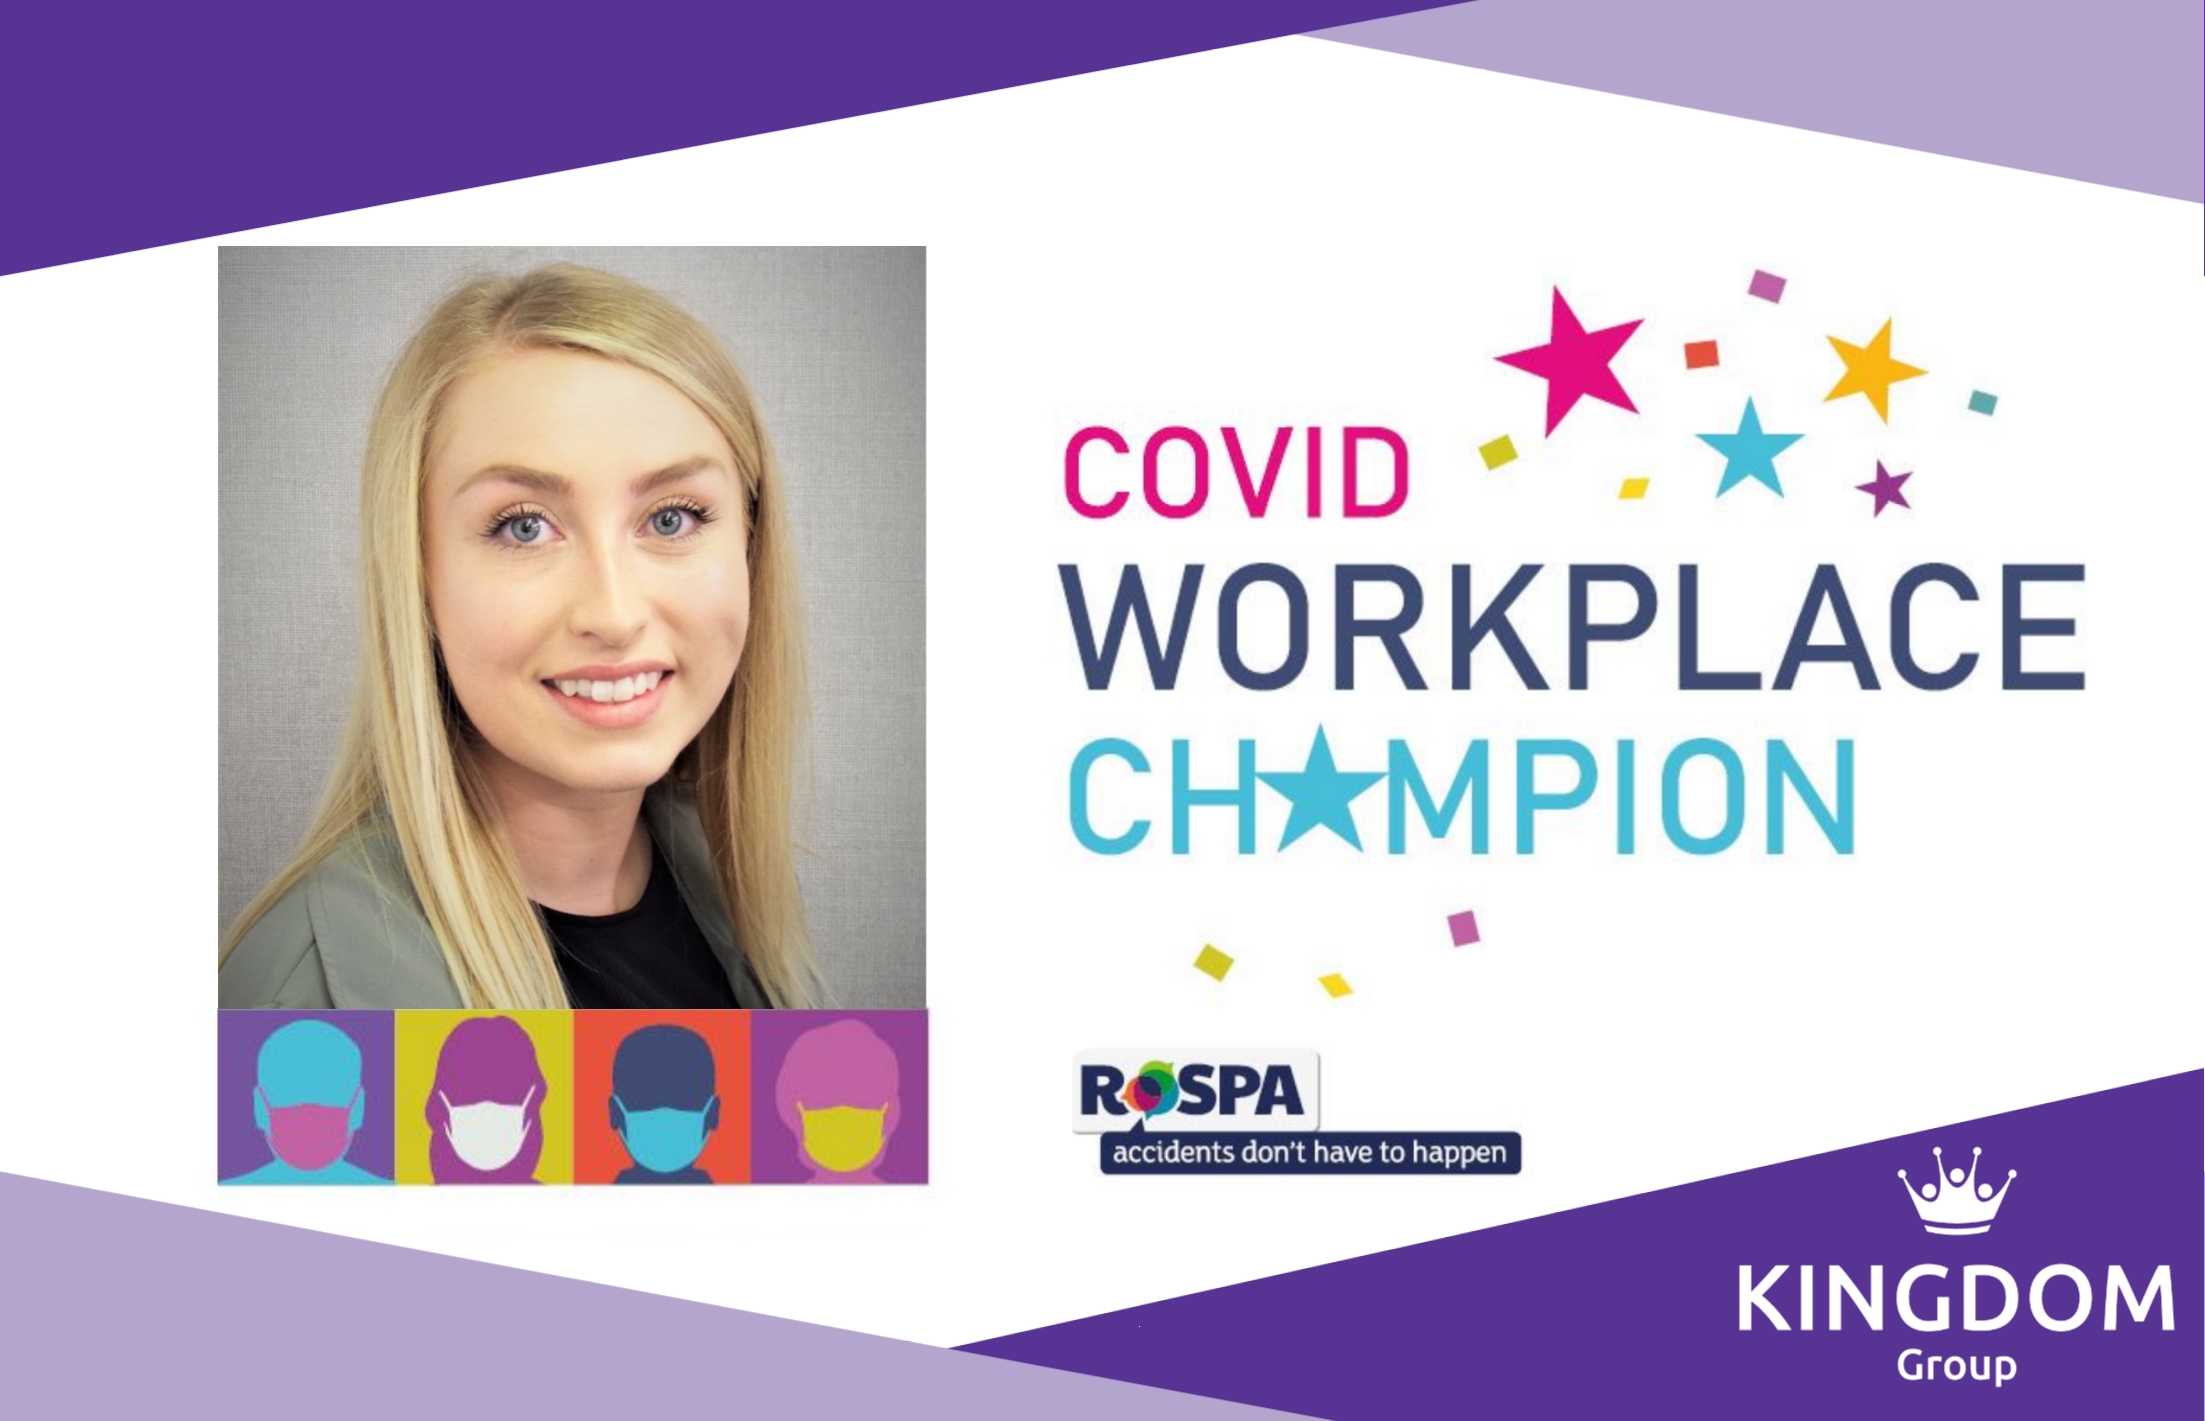 Kingdom health & safety trainee named RoSPA Covid Workplace Champion